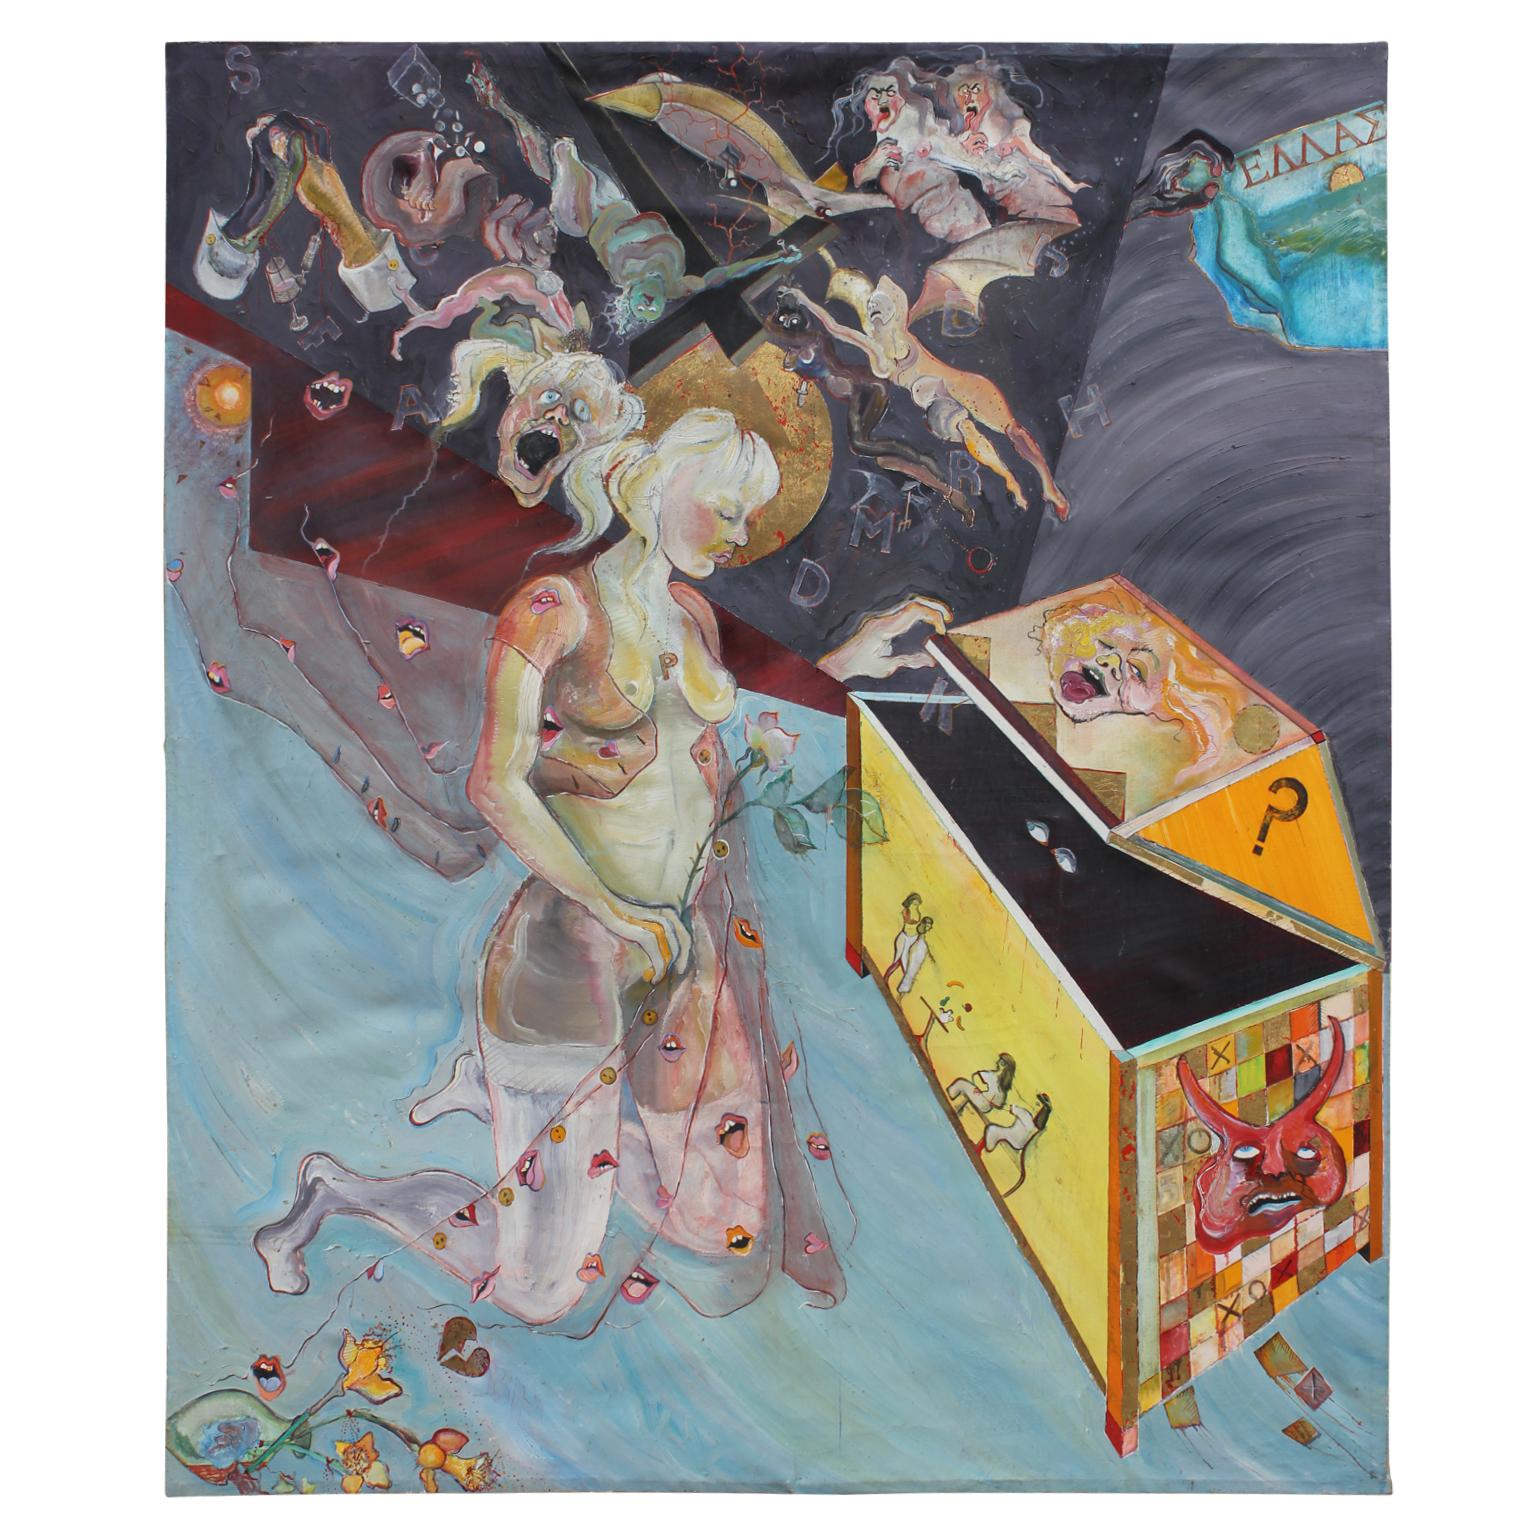 Linda Sutton Abstract Painting - "Pandora's Box" Large Greek Mythology Theme Surrealist Painting